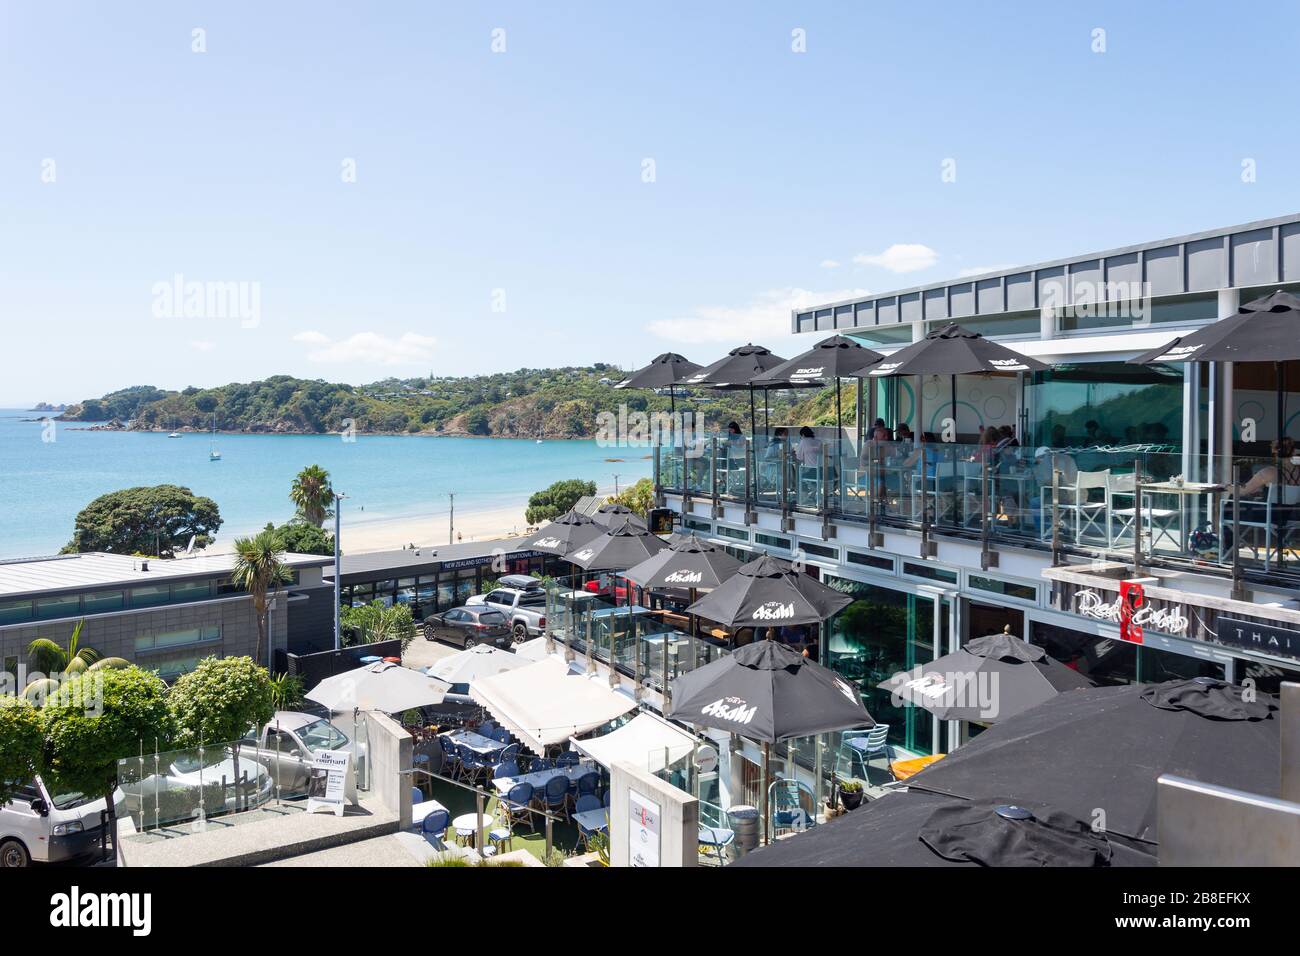 Le Courtyard Restaurant and Garden Bar donne sur Bay Oceanview Road, Oneroa, Waiheke Island, Hauraki Gulf, Auckland, Nouvelle-Zélande Banque D'Images